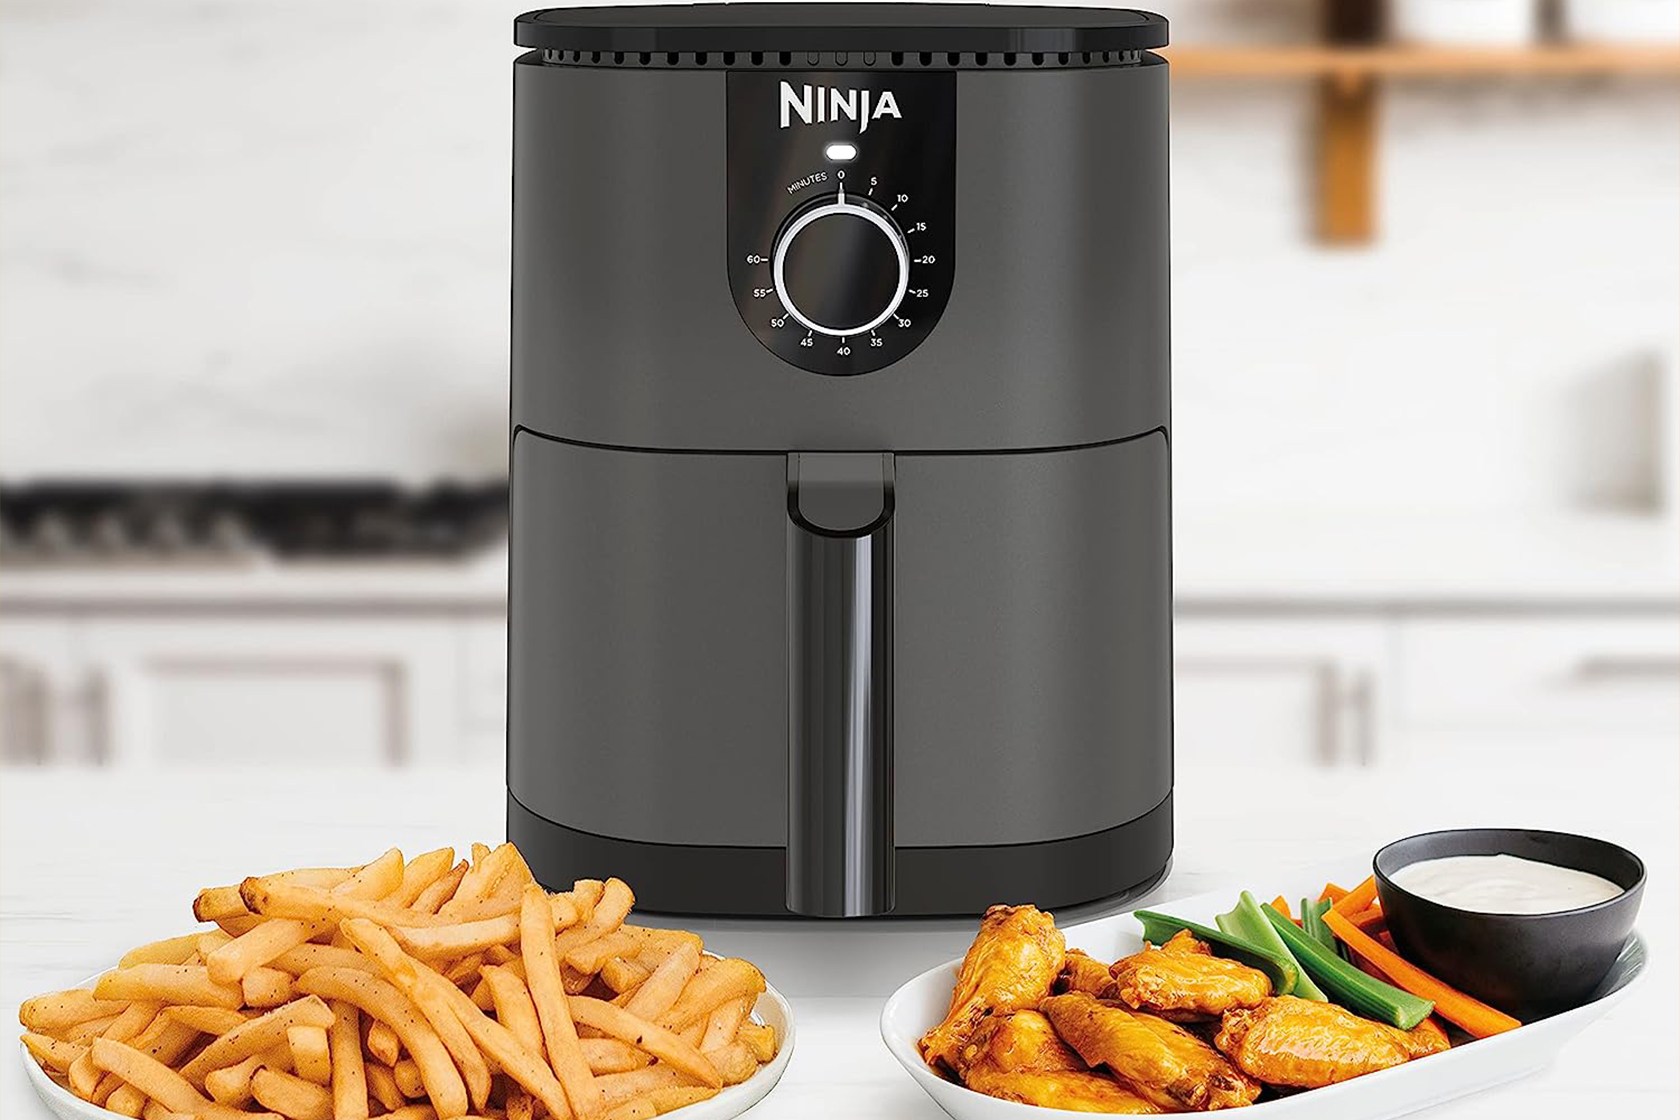 Ninja AF080 Mini Air Fryer is 50% off today on